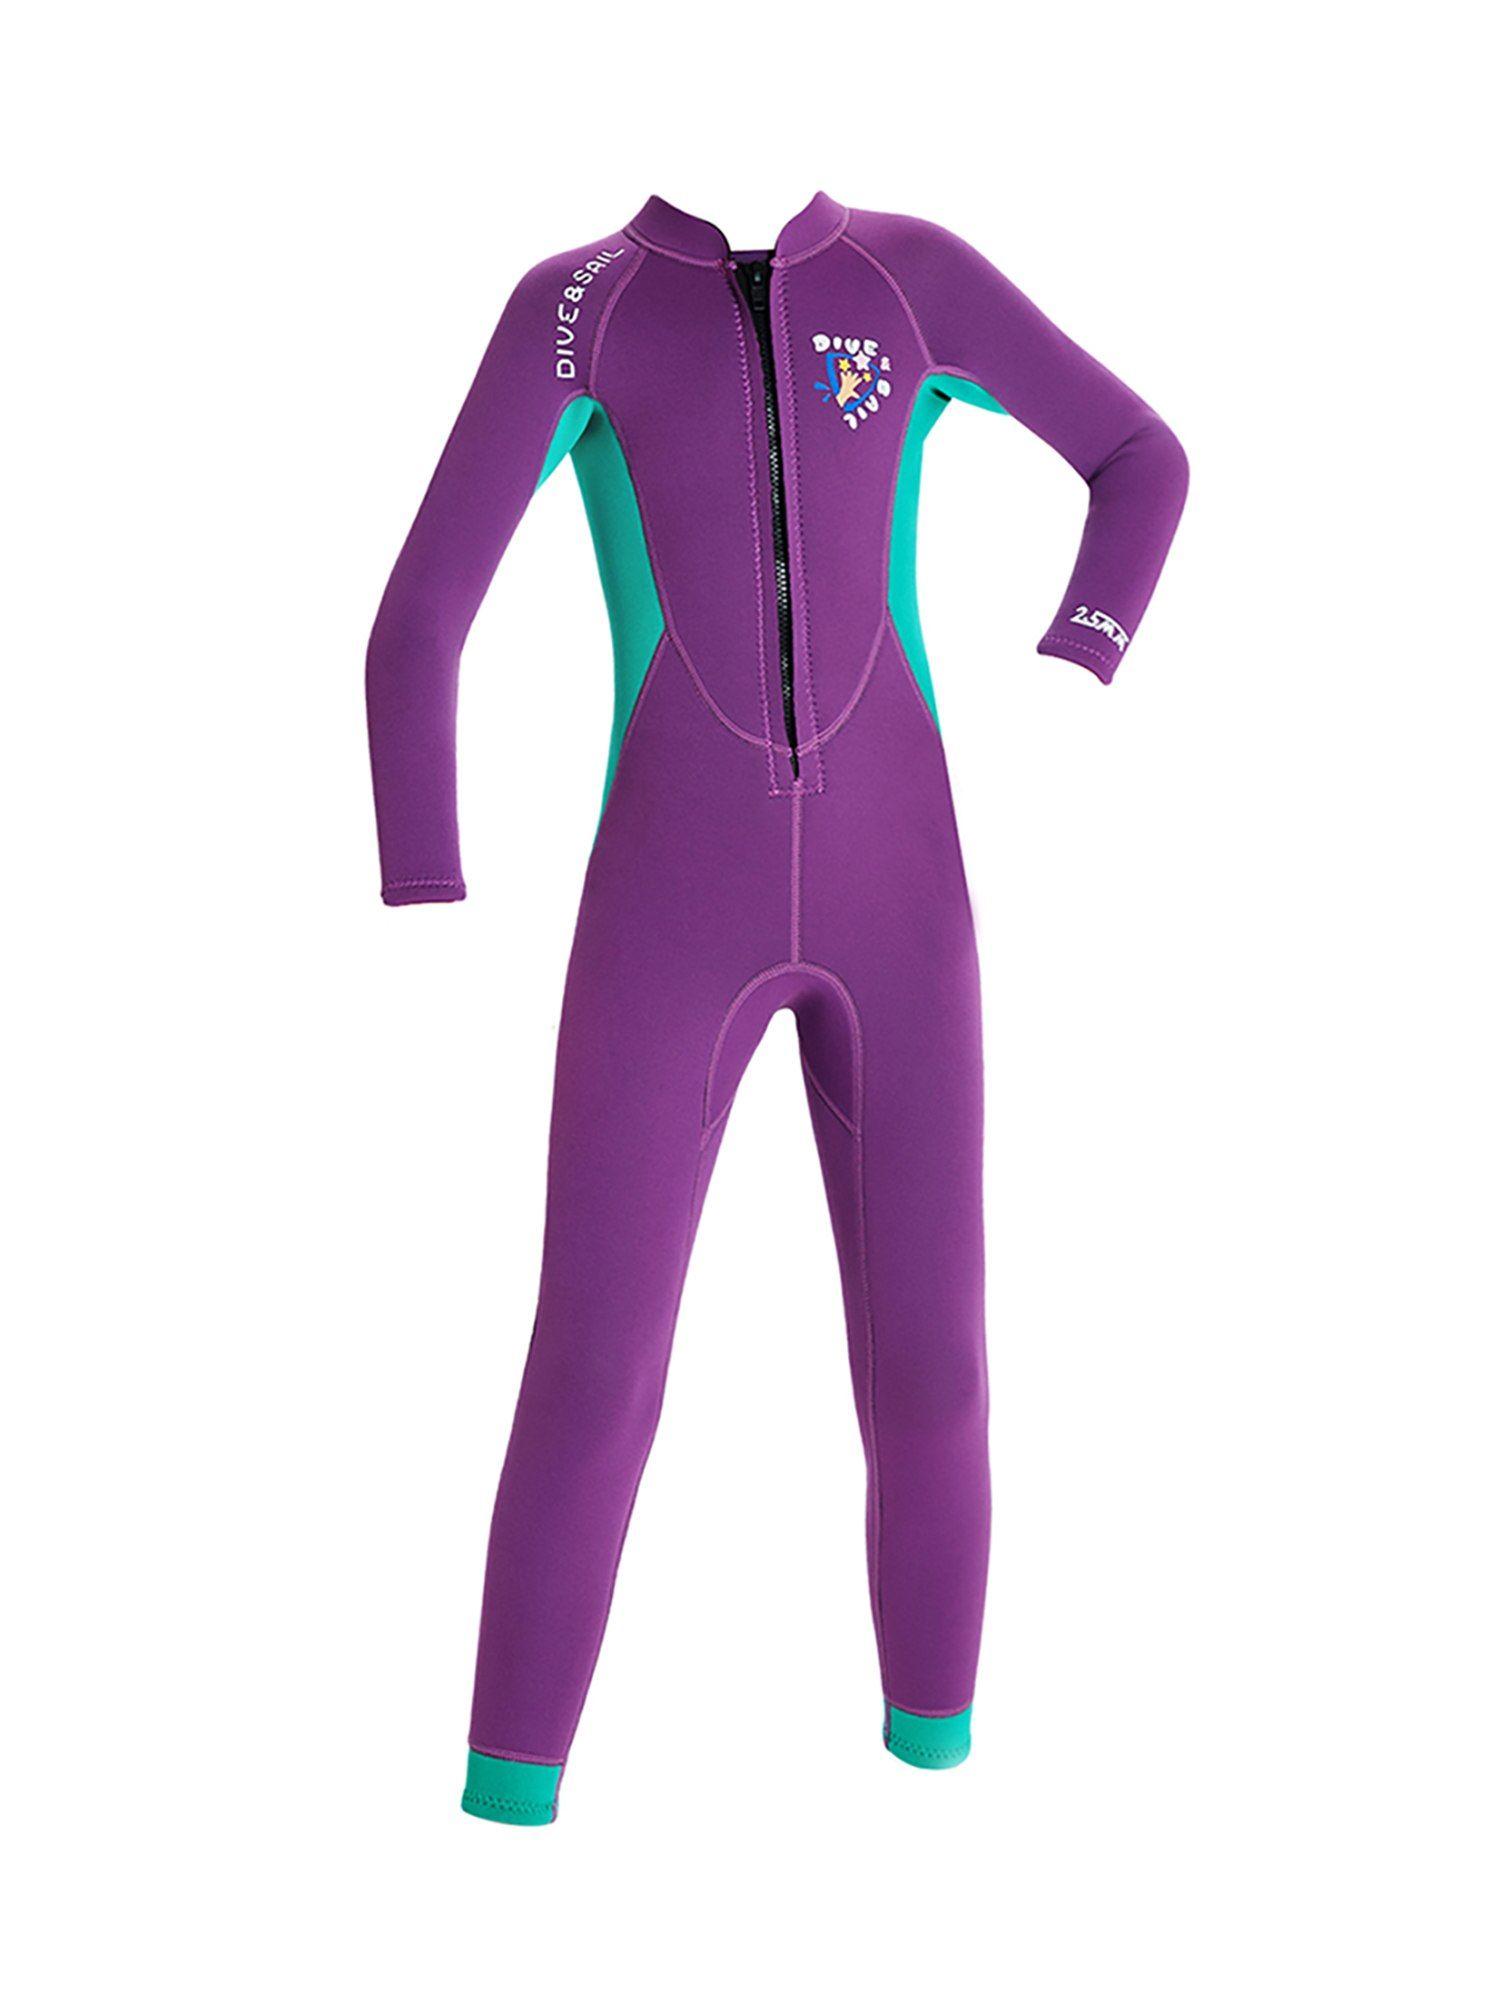 25mmneoprenefull length purple & turquoise full sleeves swimwear